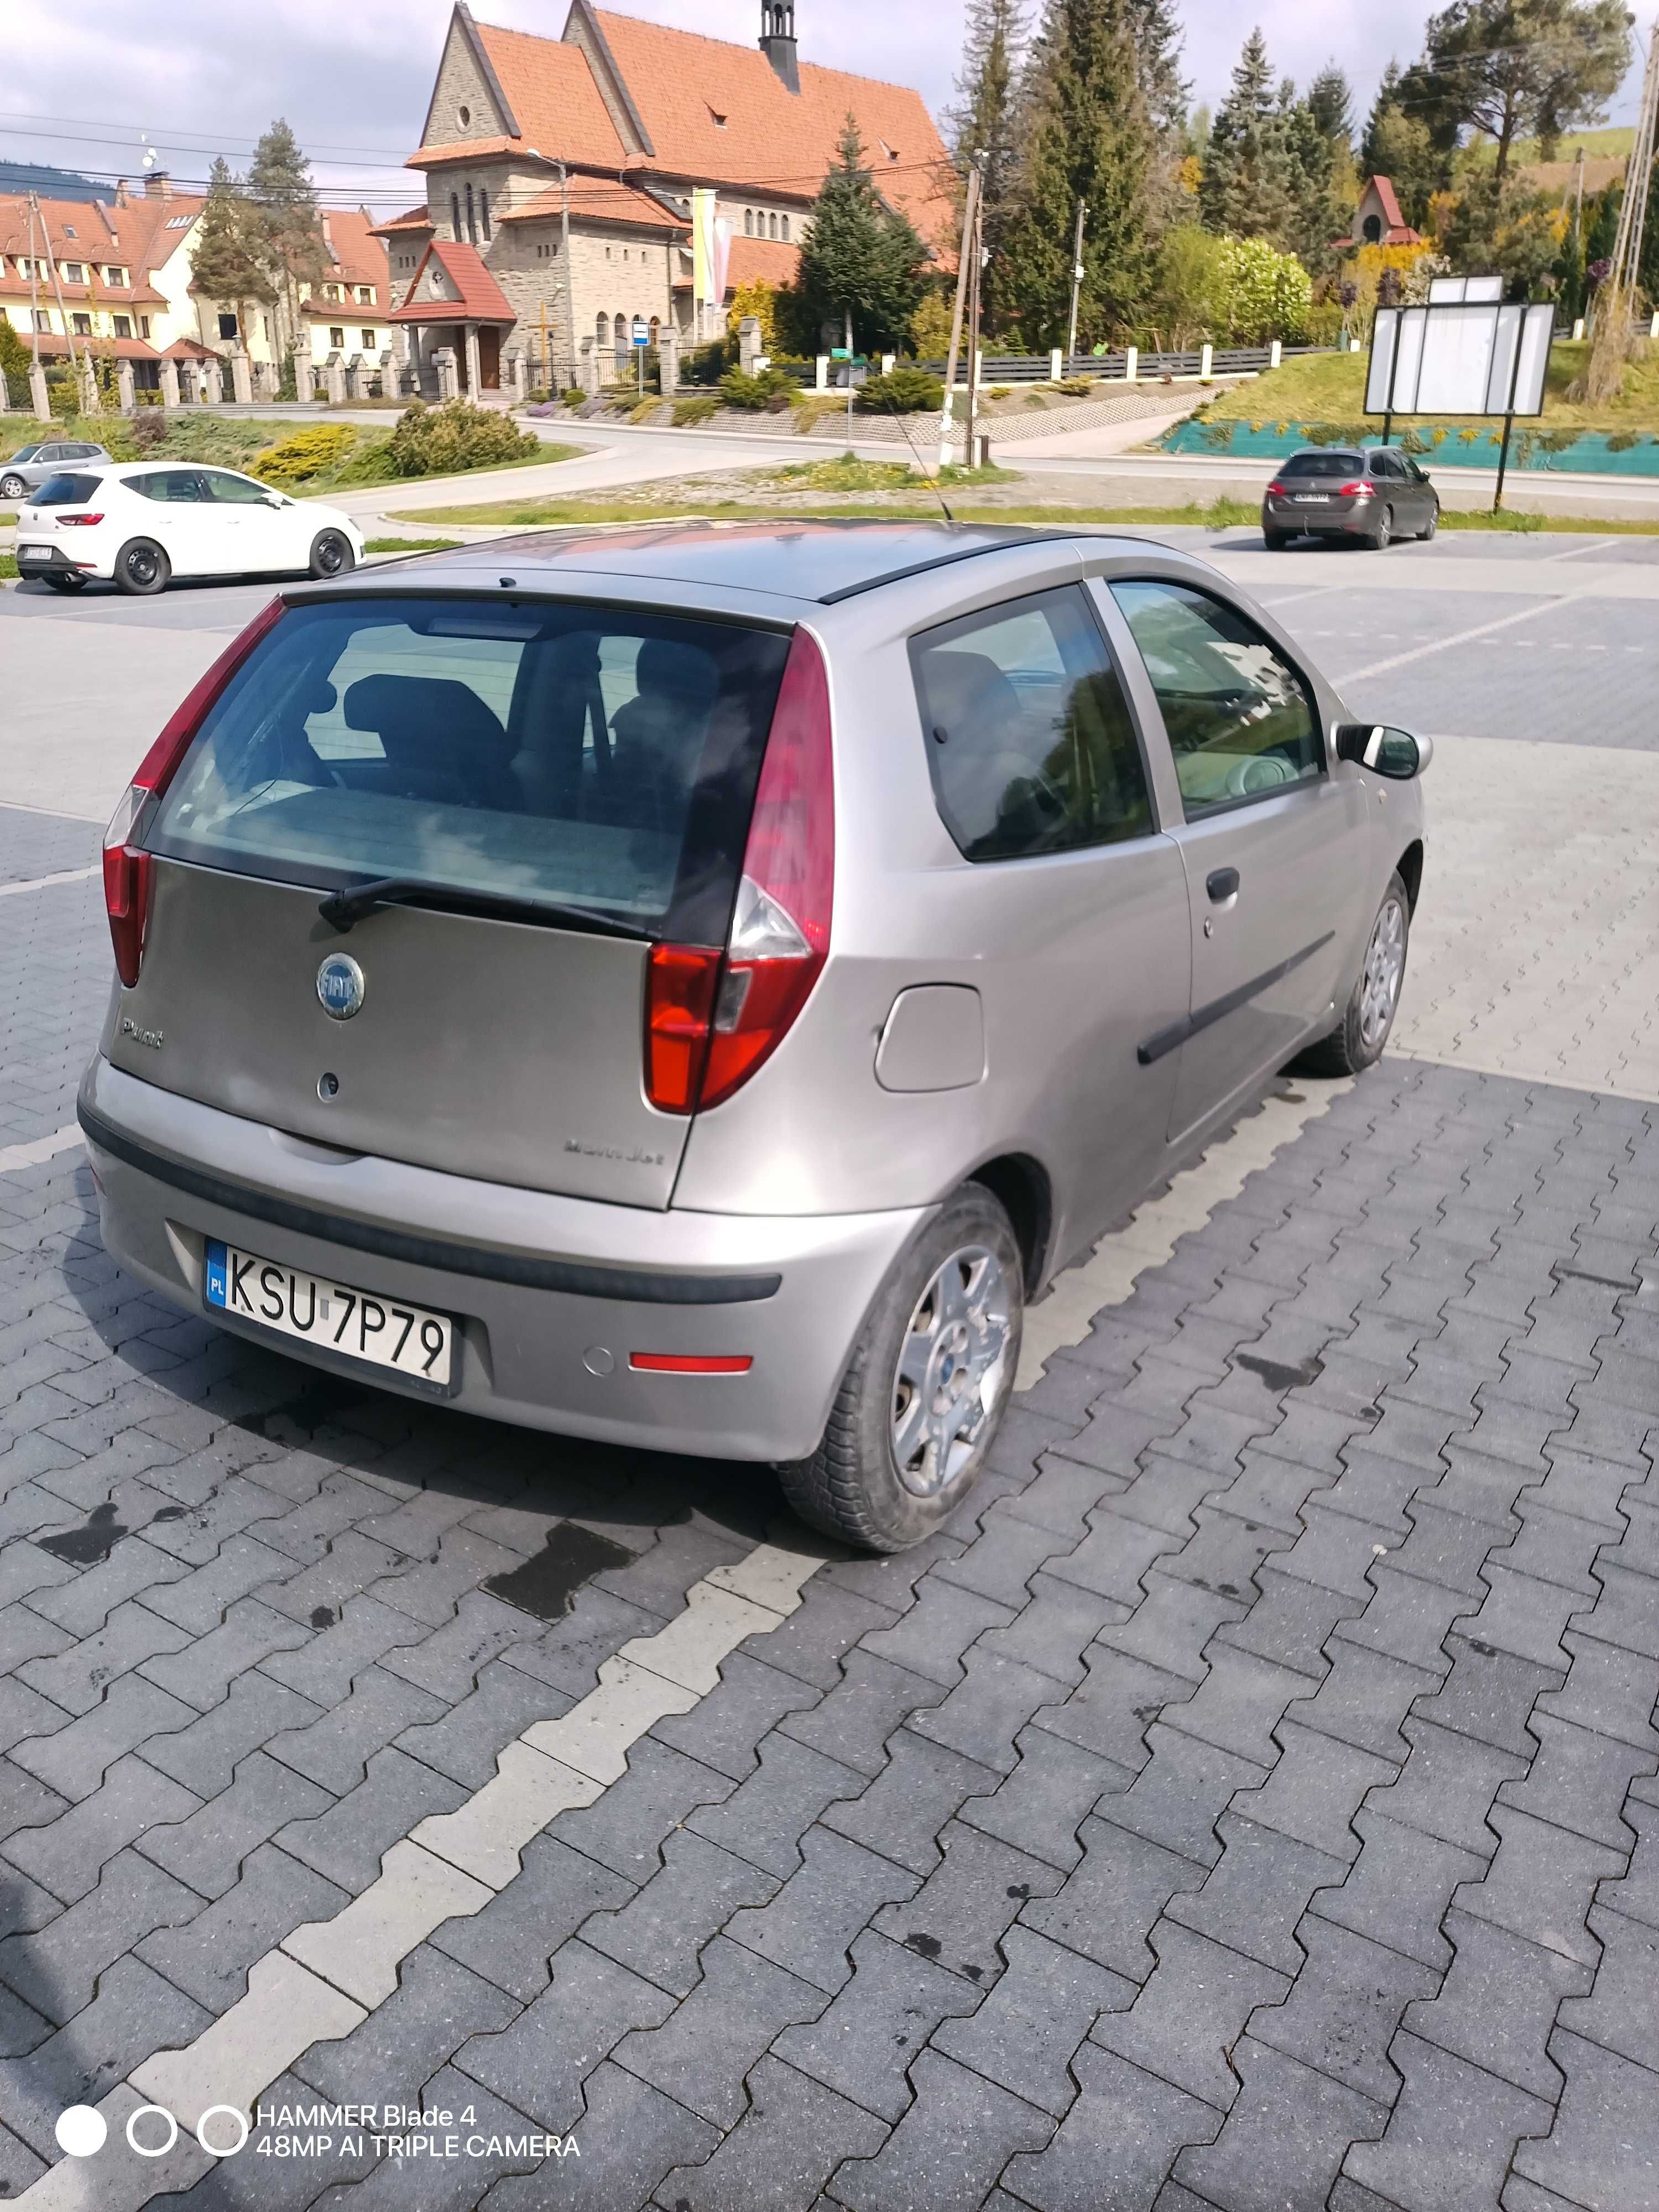 Fiat Punto 1.3 Multijet